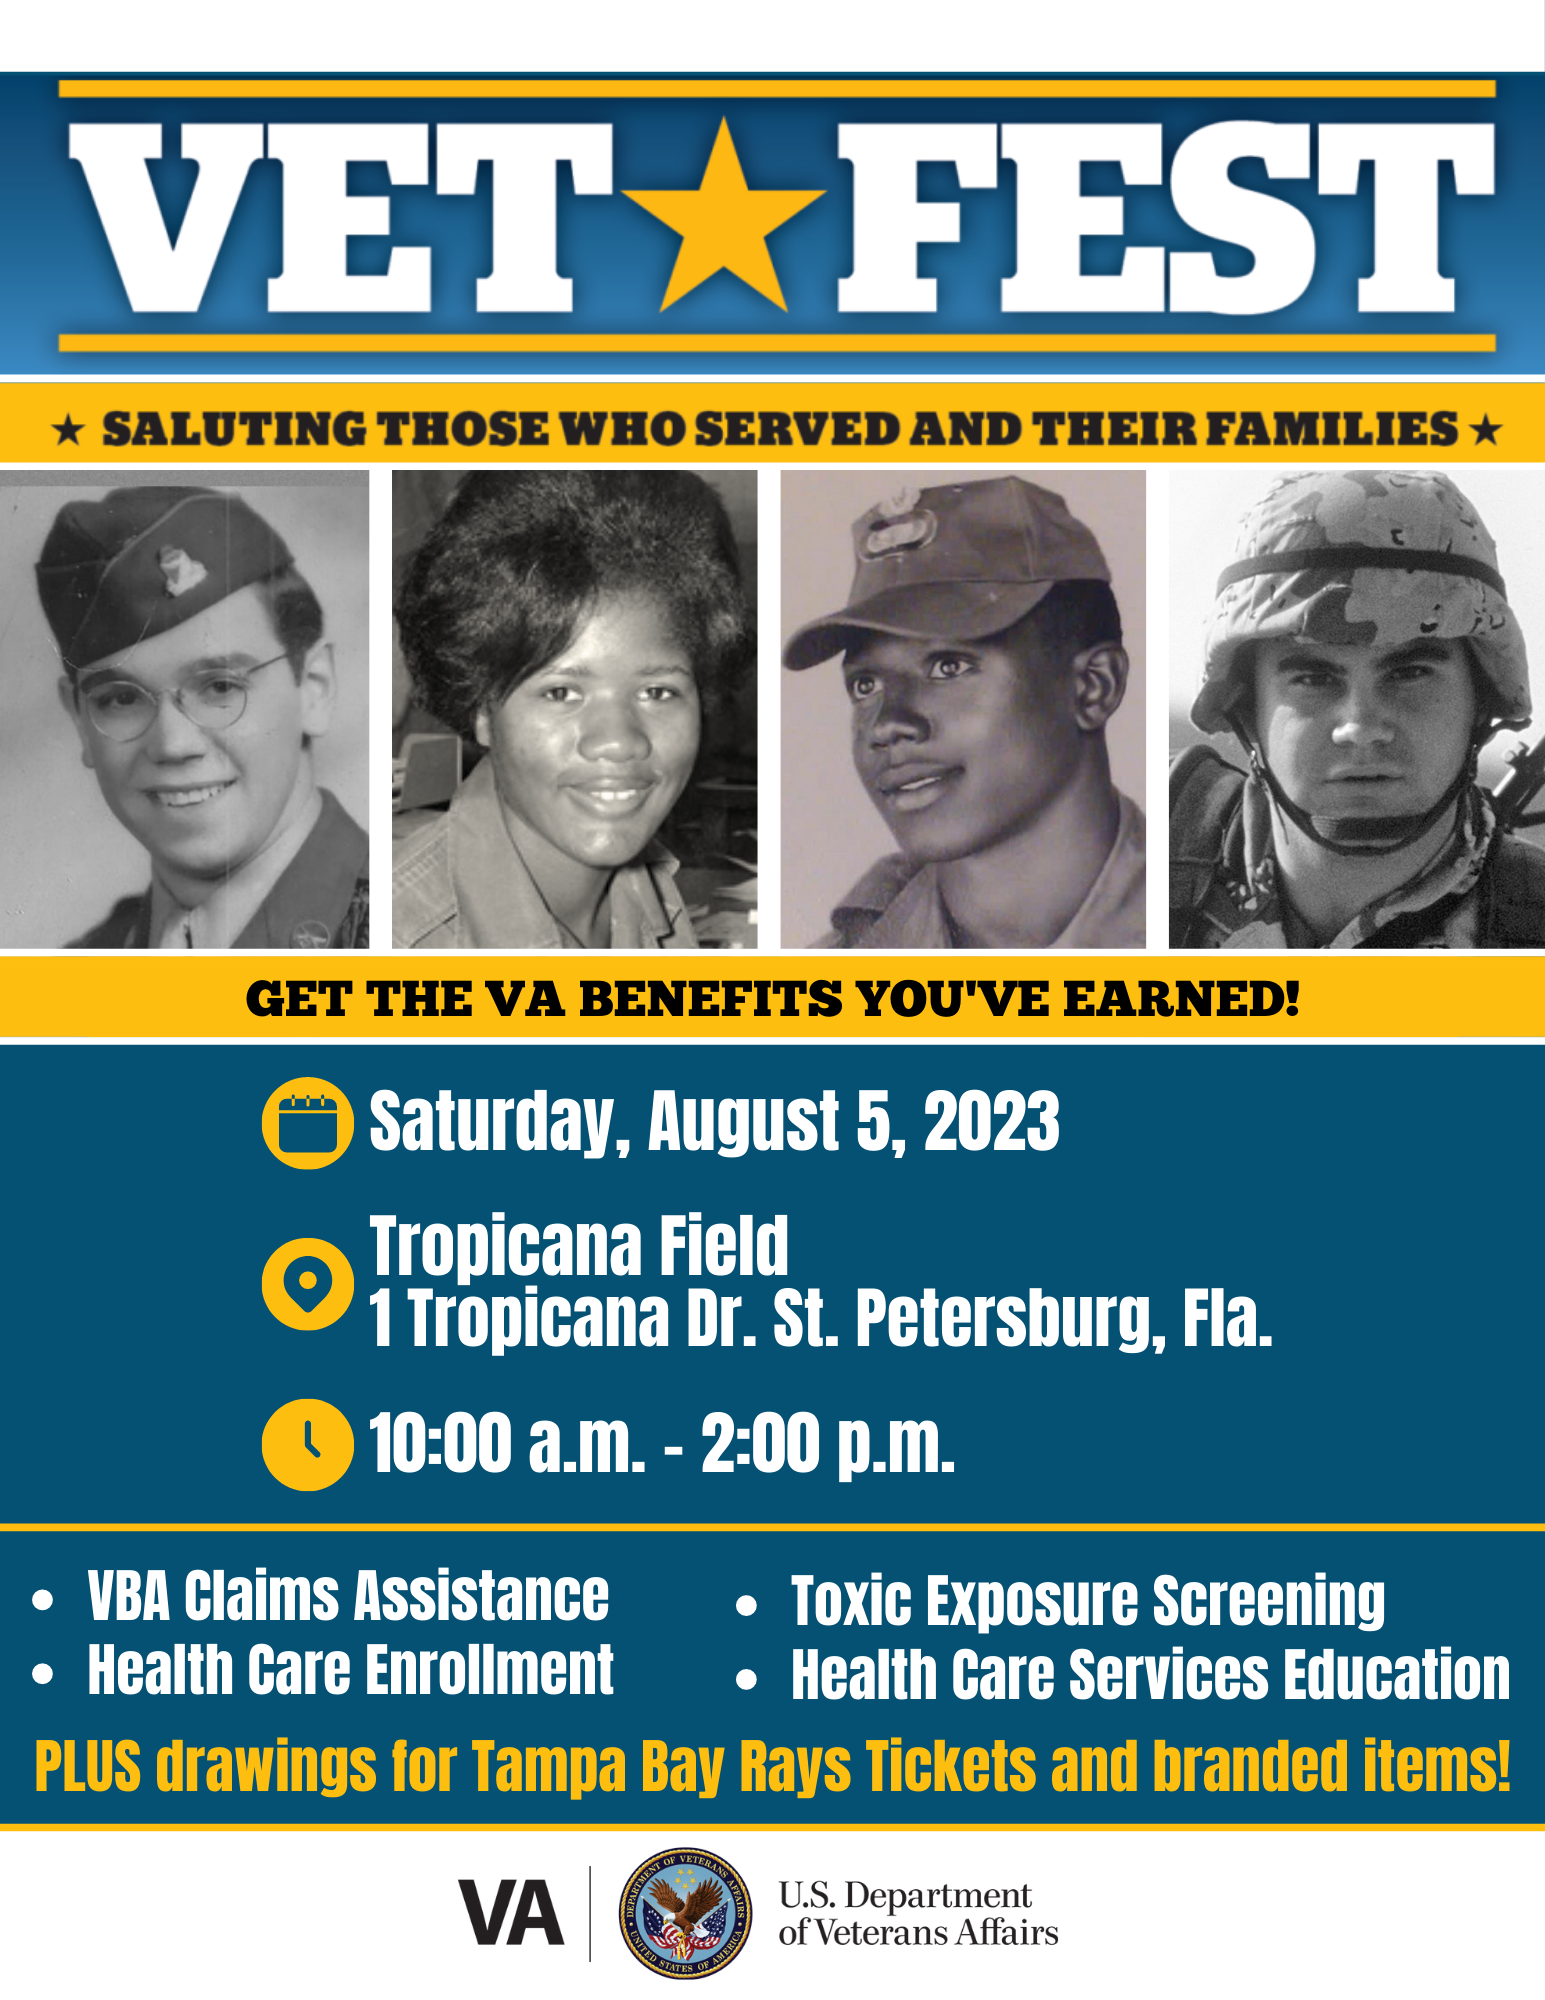 Image of VetFest flyer